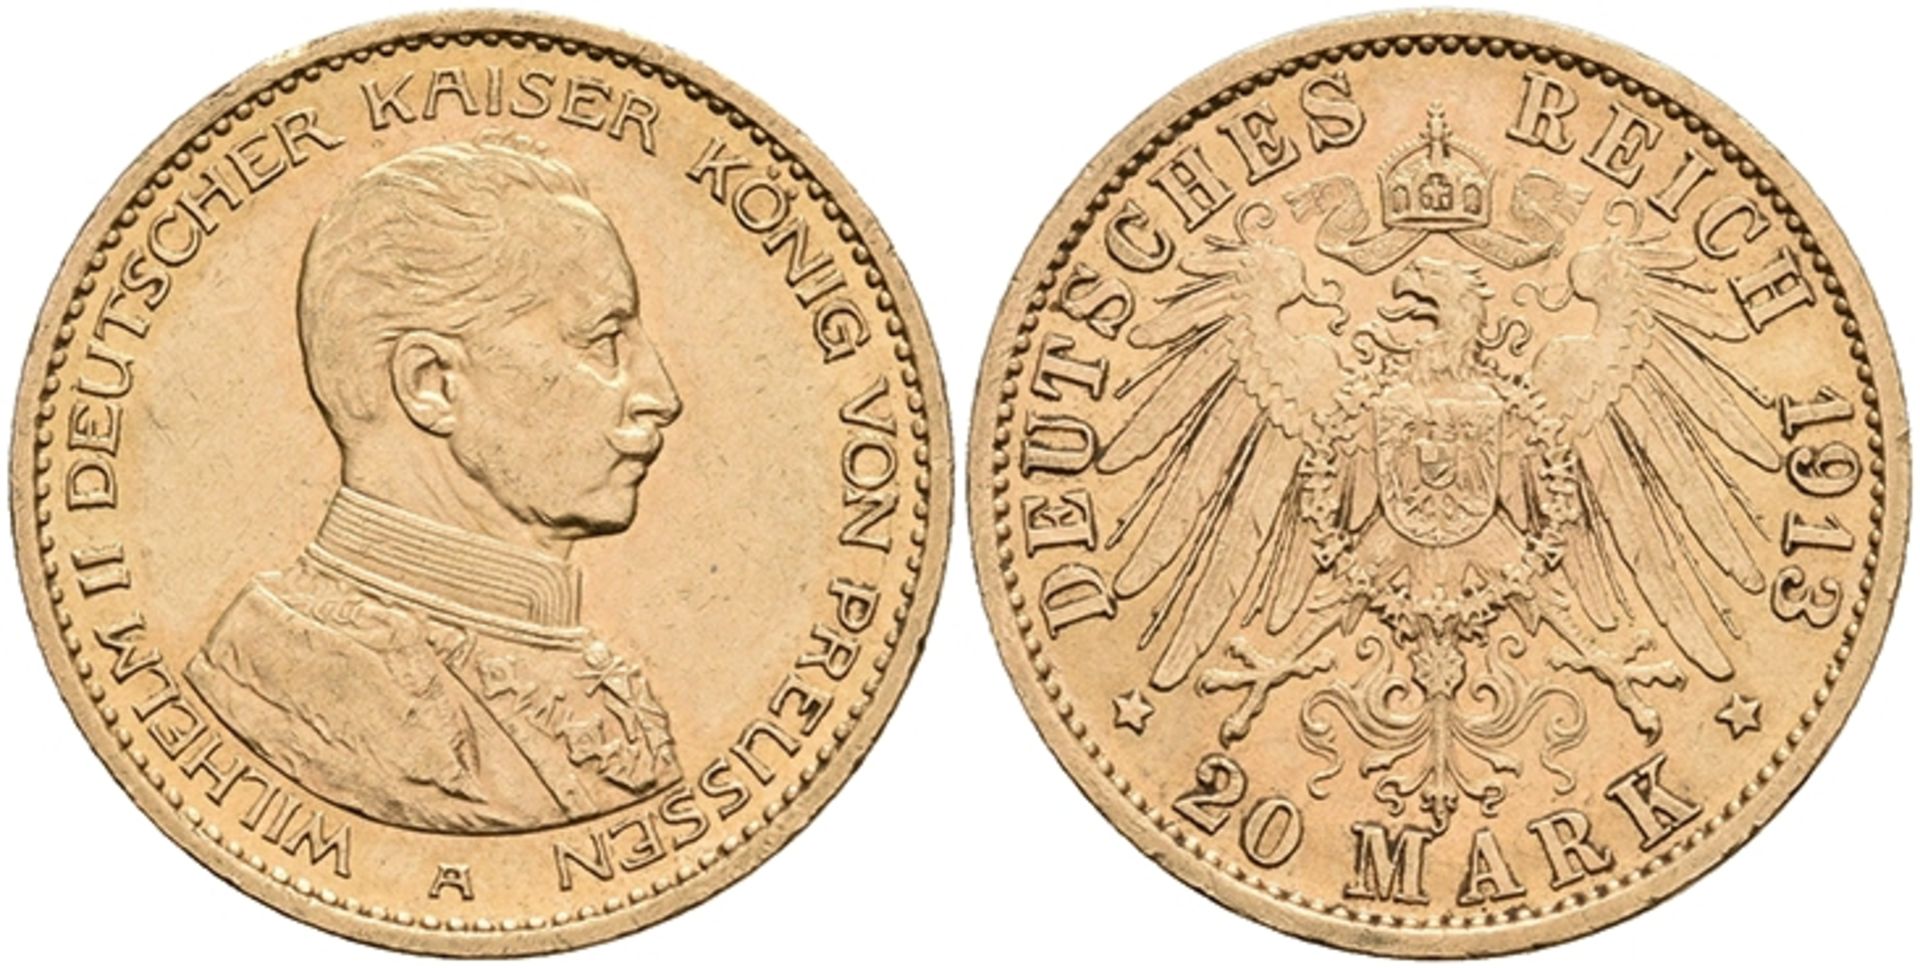 20 Mark, 1913, Wilhelm II. in Gardeuniform, kl. Rf., kl. Kr., ss-vz. J. 253.